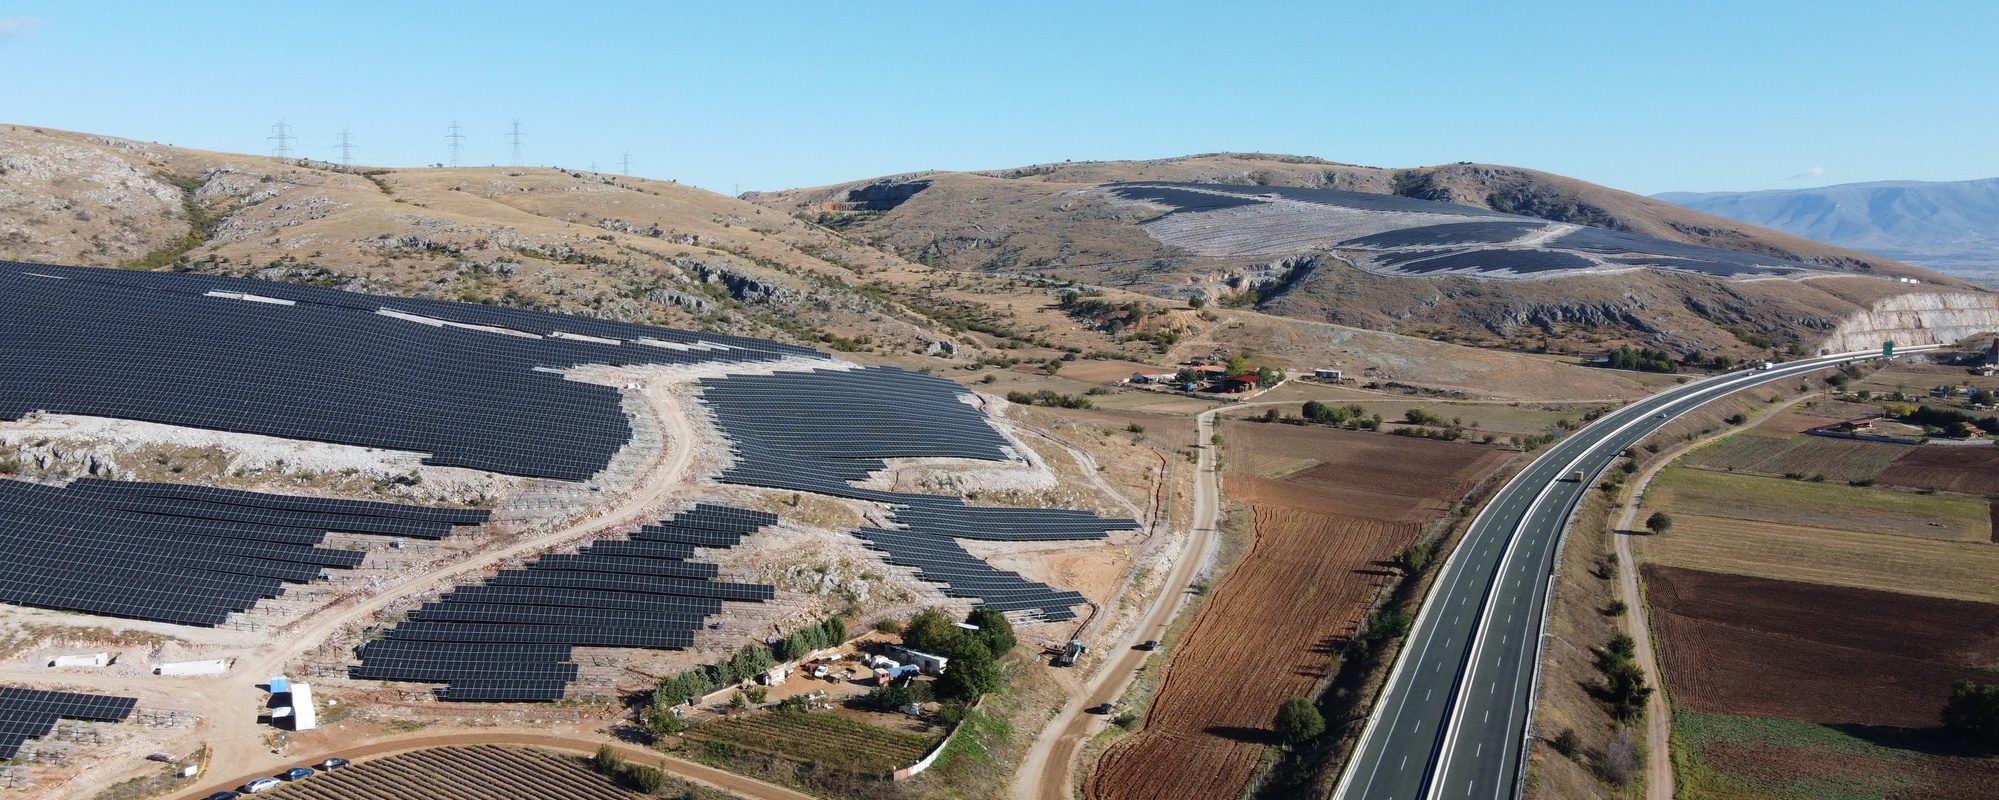 Aerial shot of Kozani solar project, Greece